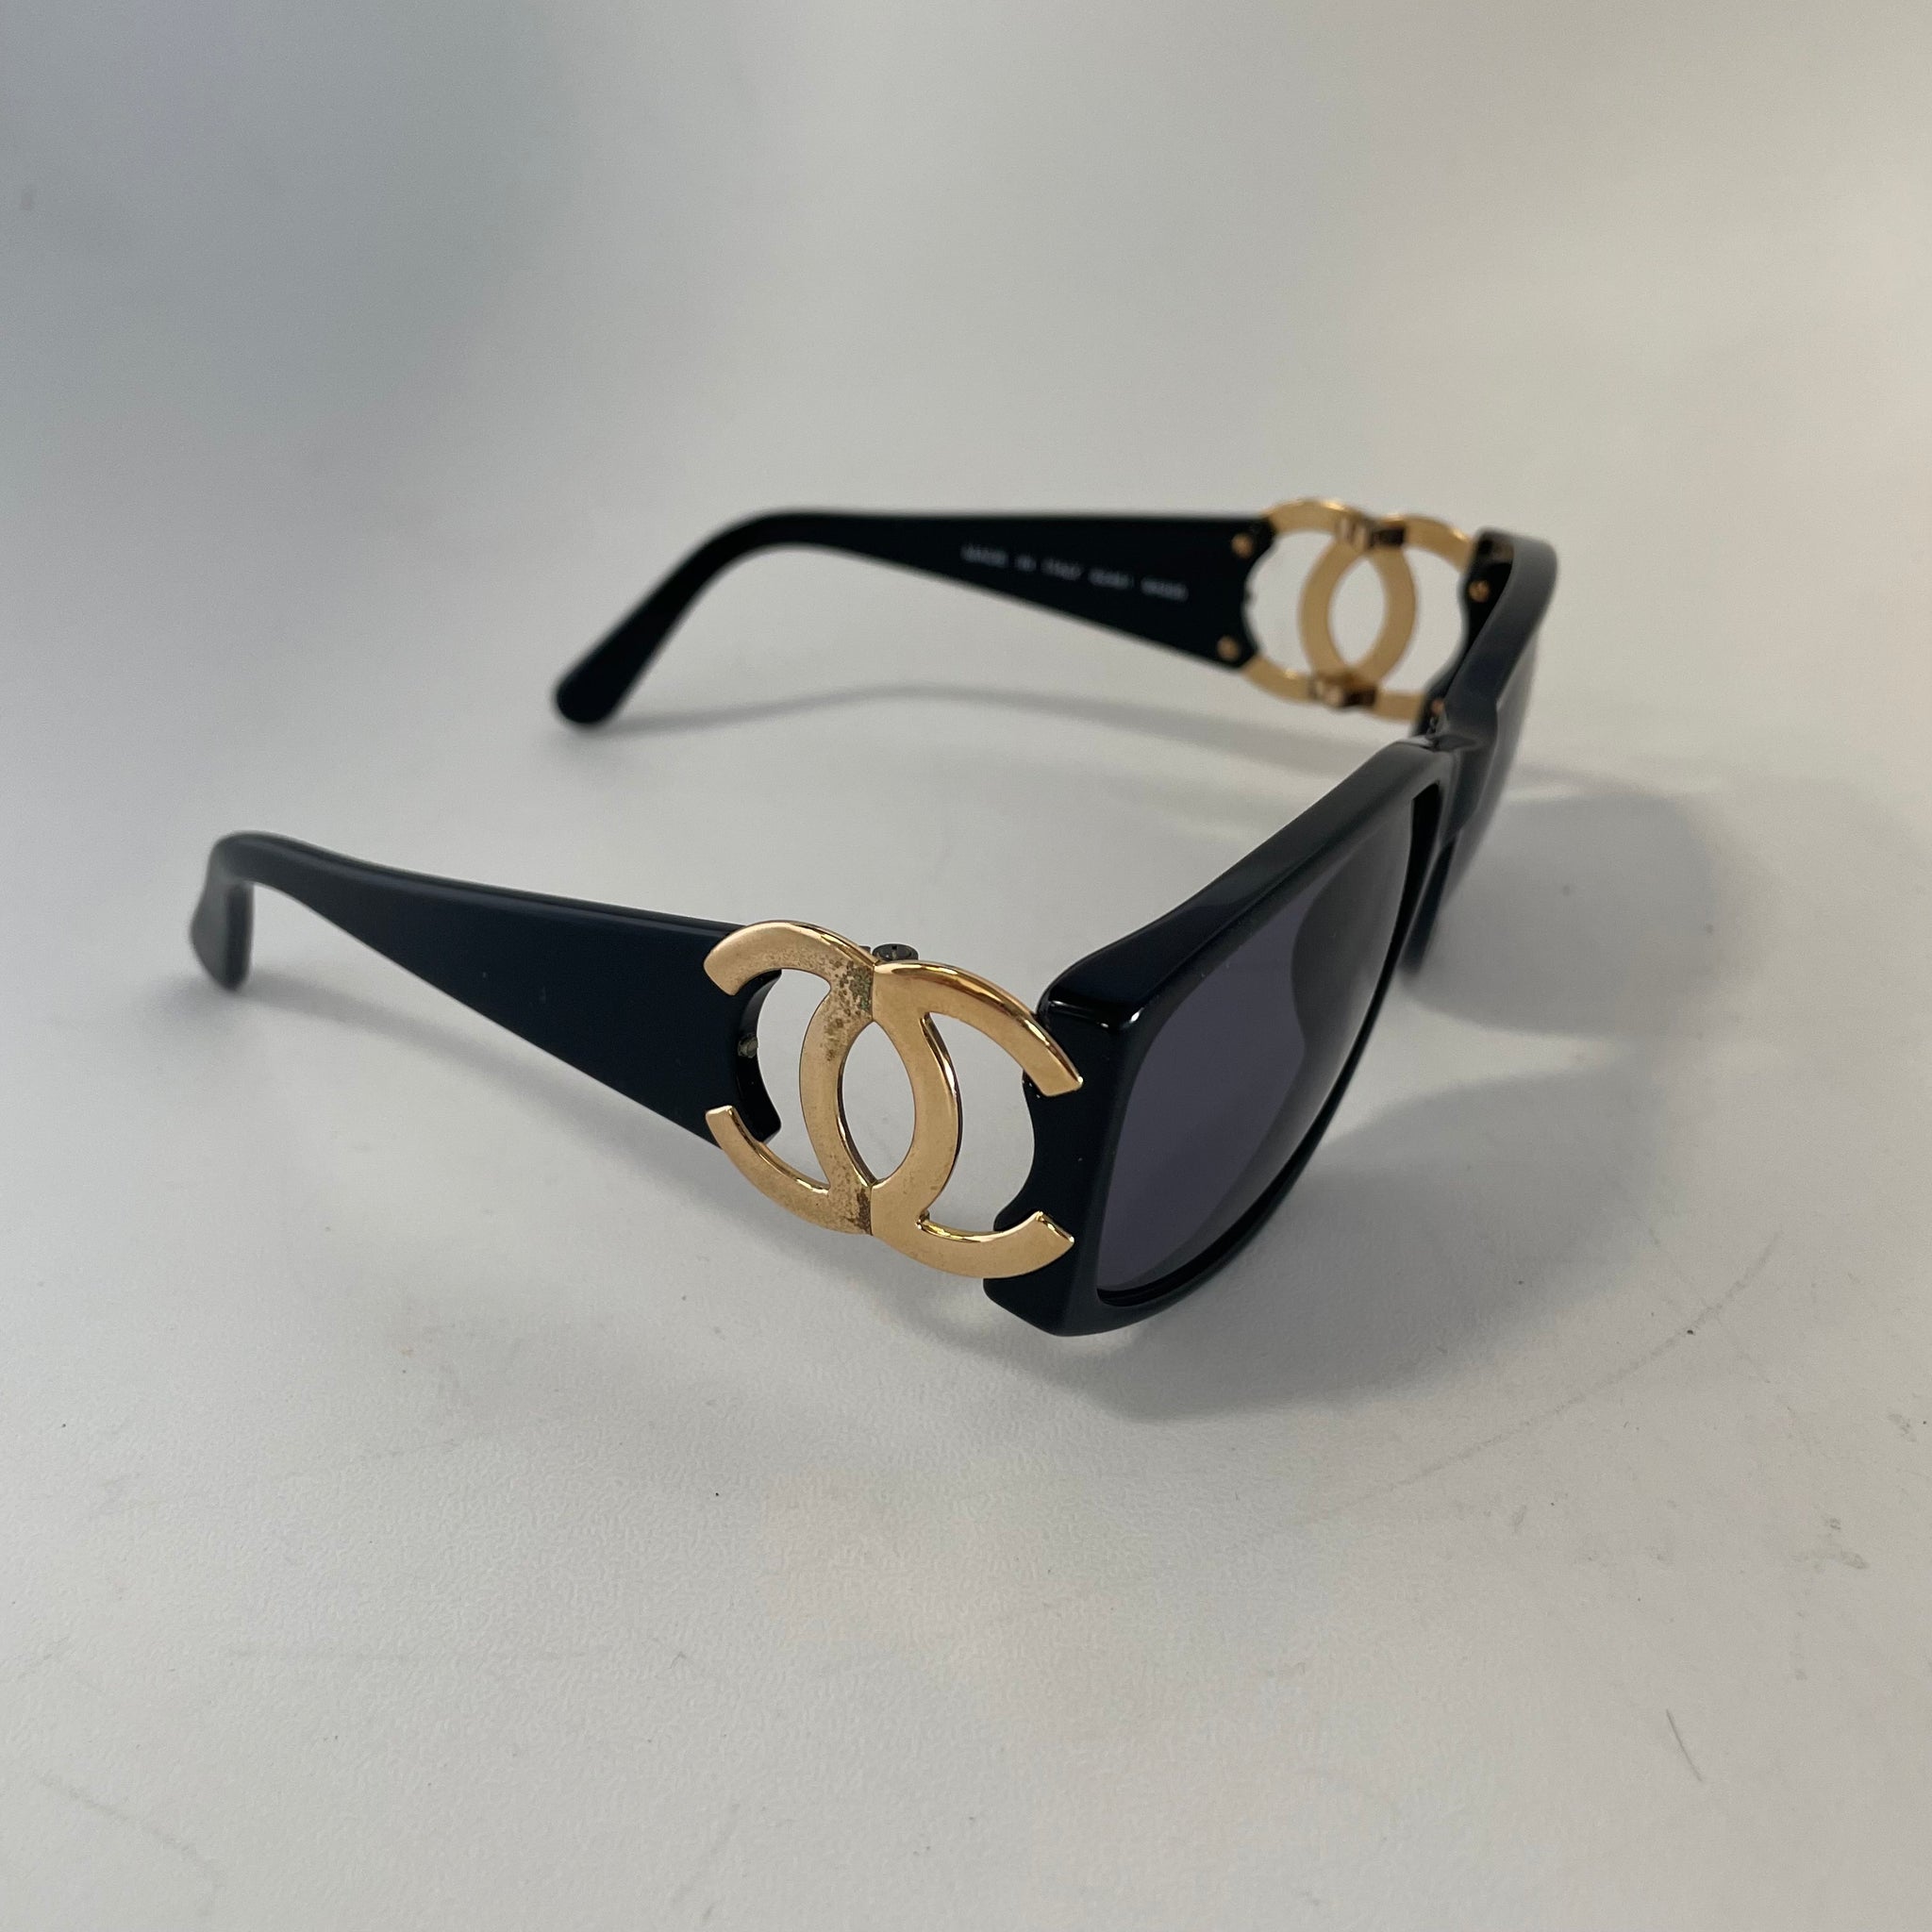 Authentic Chanel Gold CC Rectangular Sunglasses